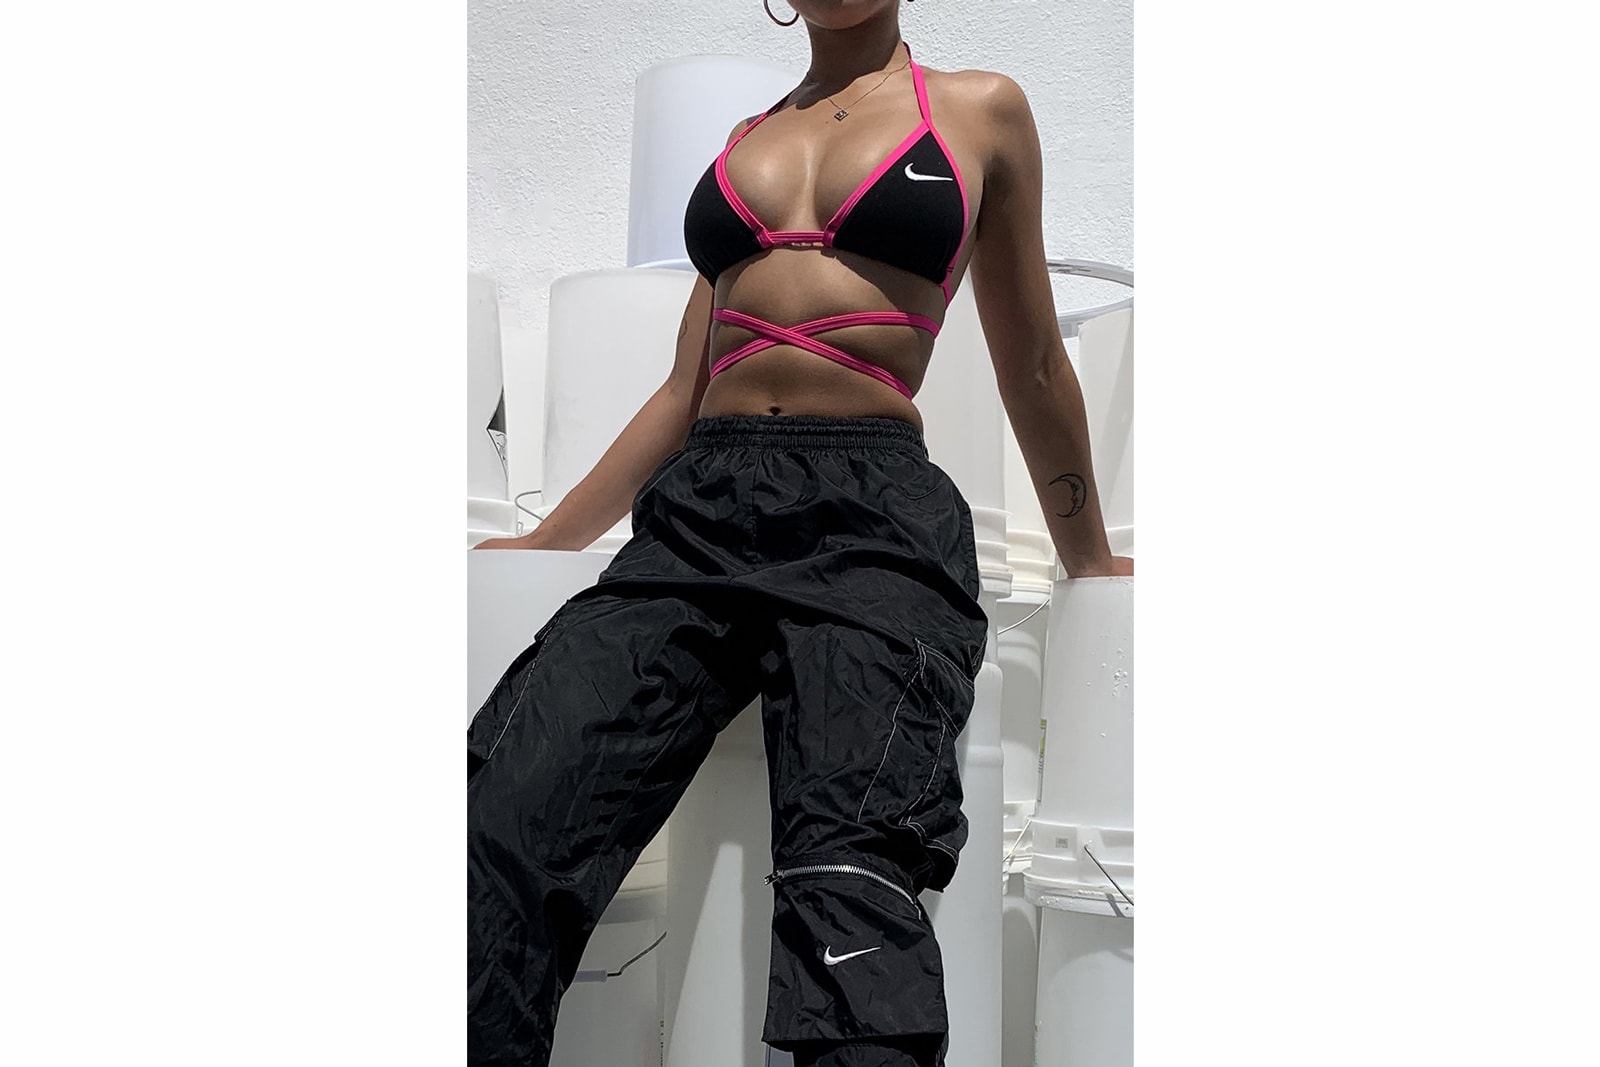 Frankie Collective Nike Triangle Top Vintage Rework Bikini Pink Swoosh Logo